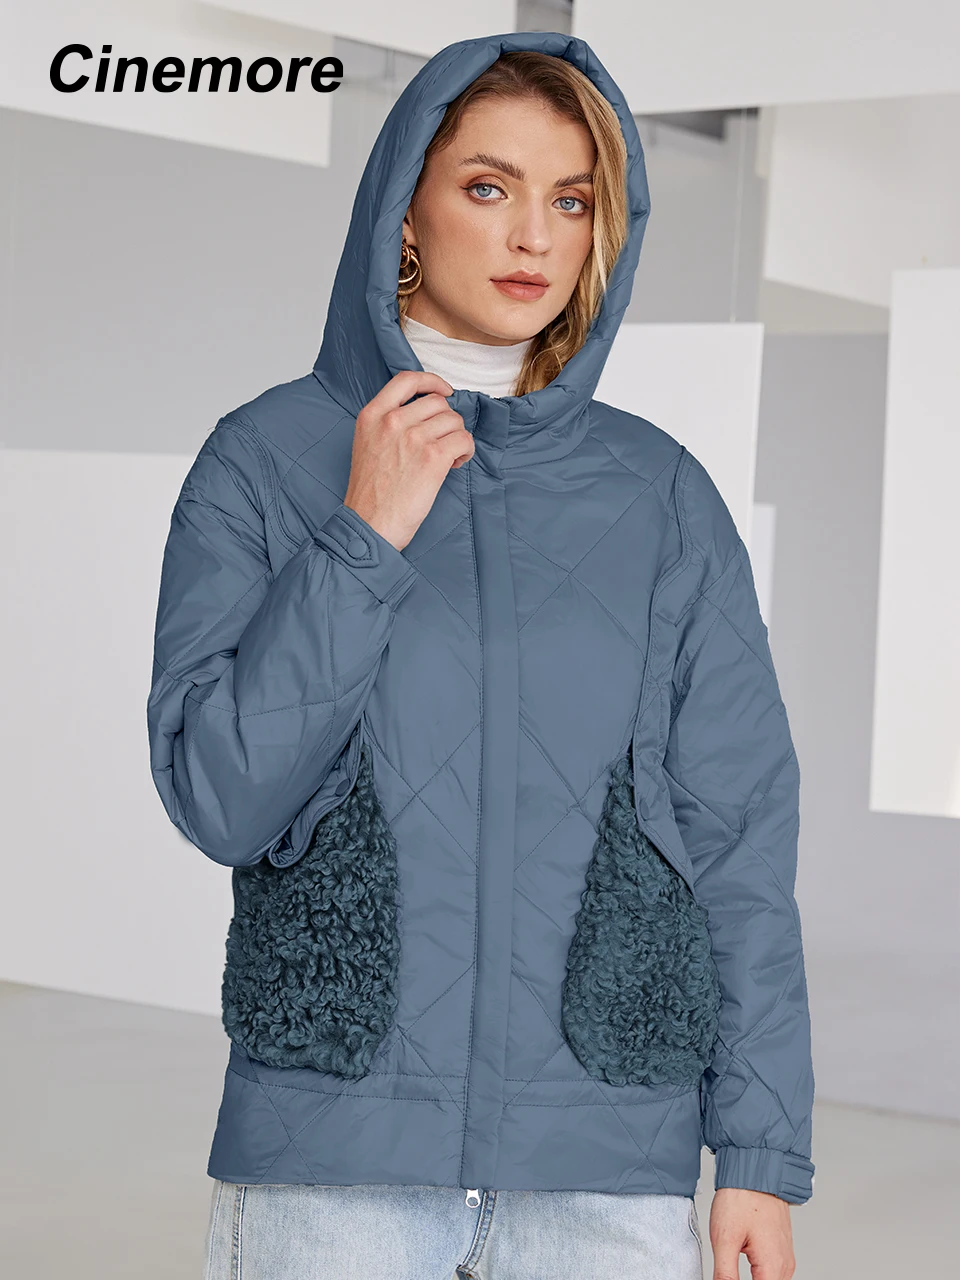 Cheap GASMAN women's jacket spring 2022 short thin cotton clothes